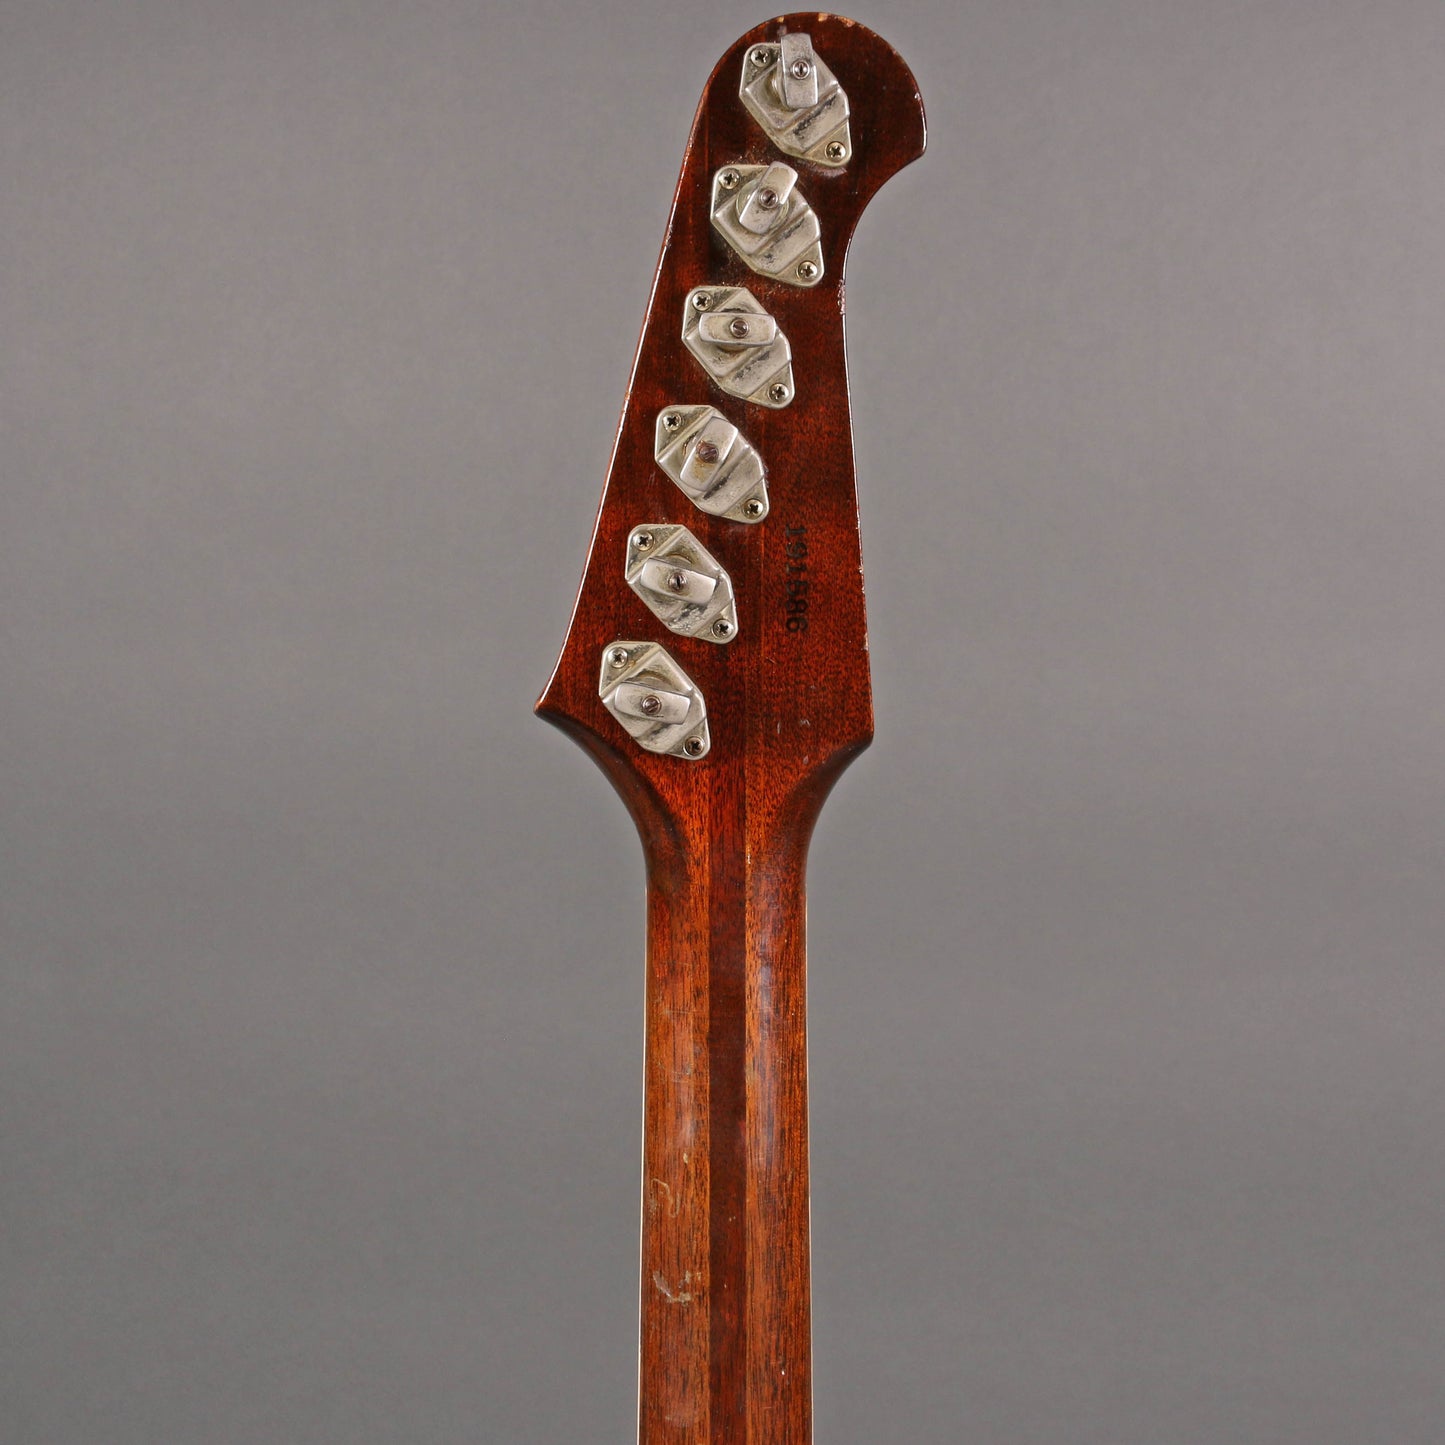 1964 Gibson Firebird III